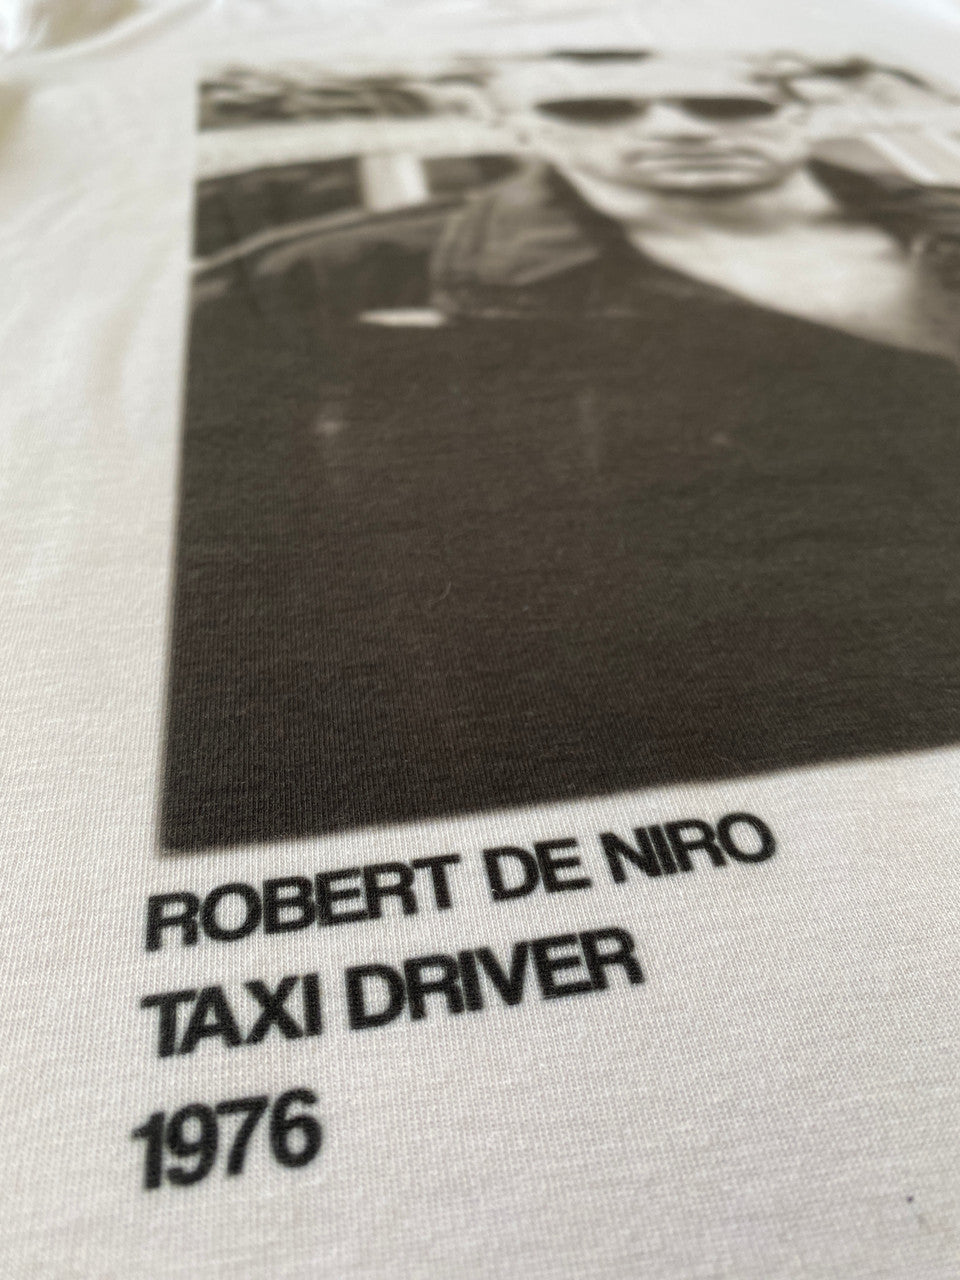 Robert De Niro 1976 KiSS T-Shirt - Taxi Driver - 70s movie - Mohawk